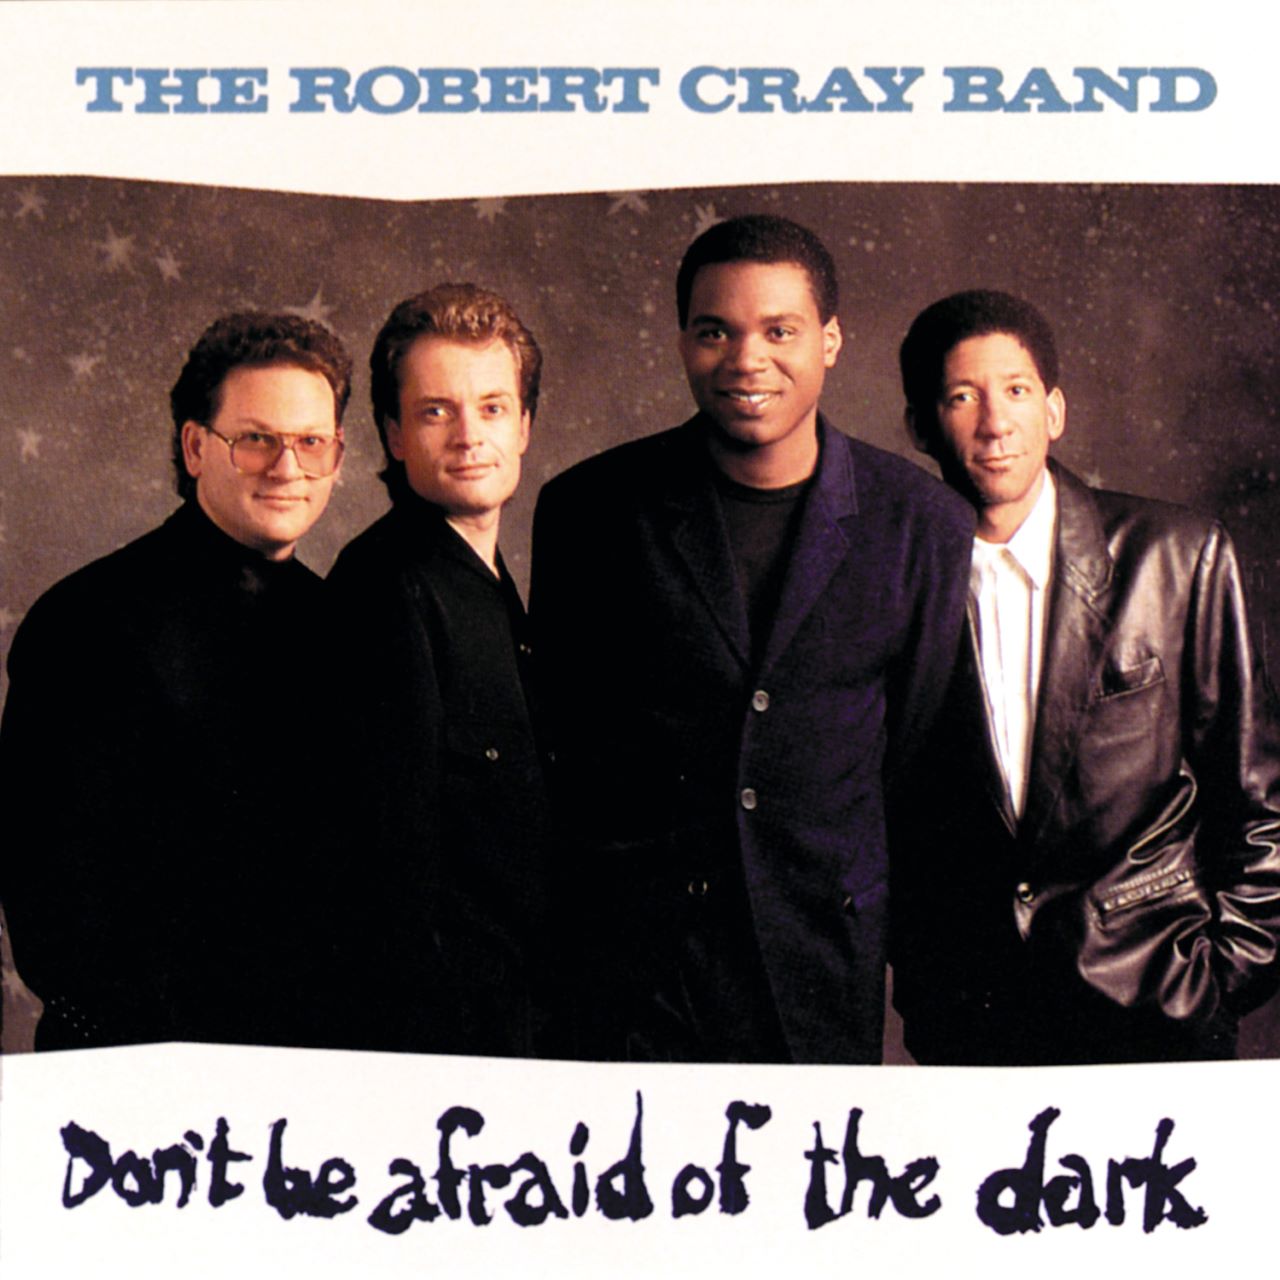 Robert Cray - Don't Be Afraid Of The Dark cover album